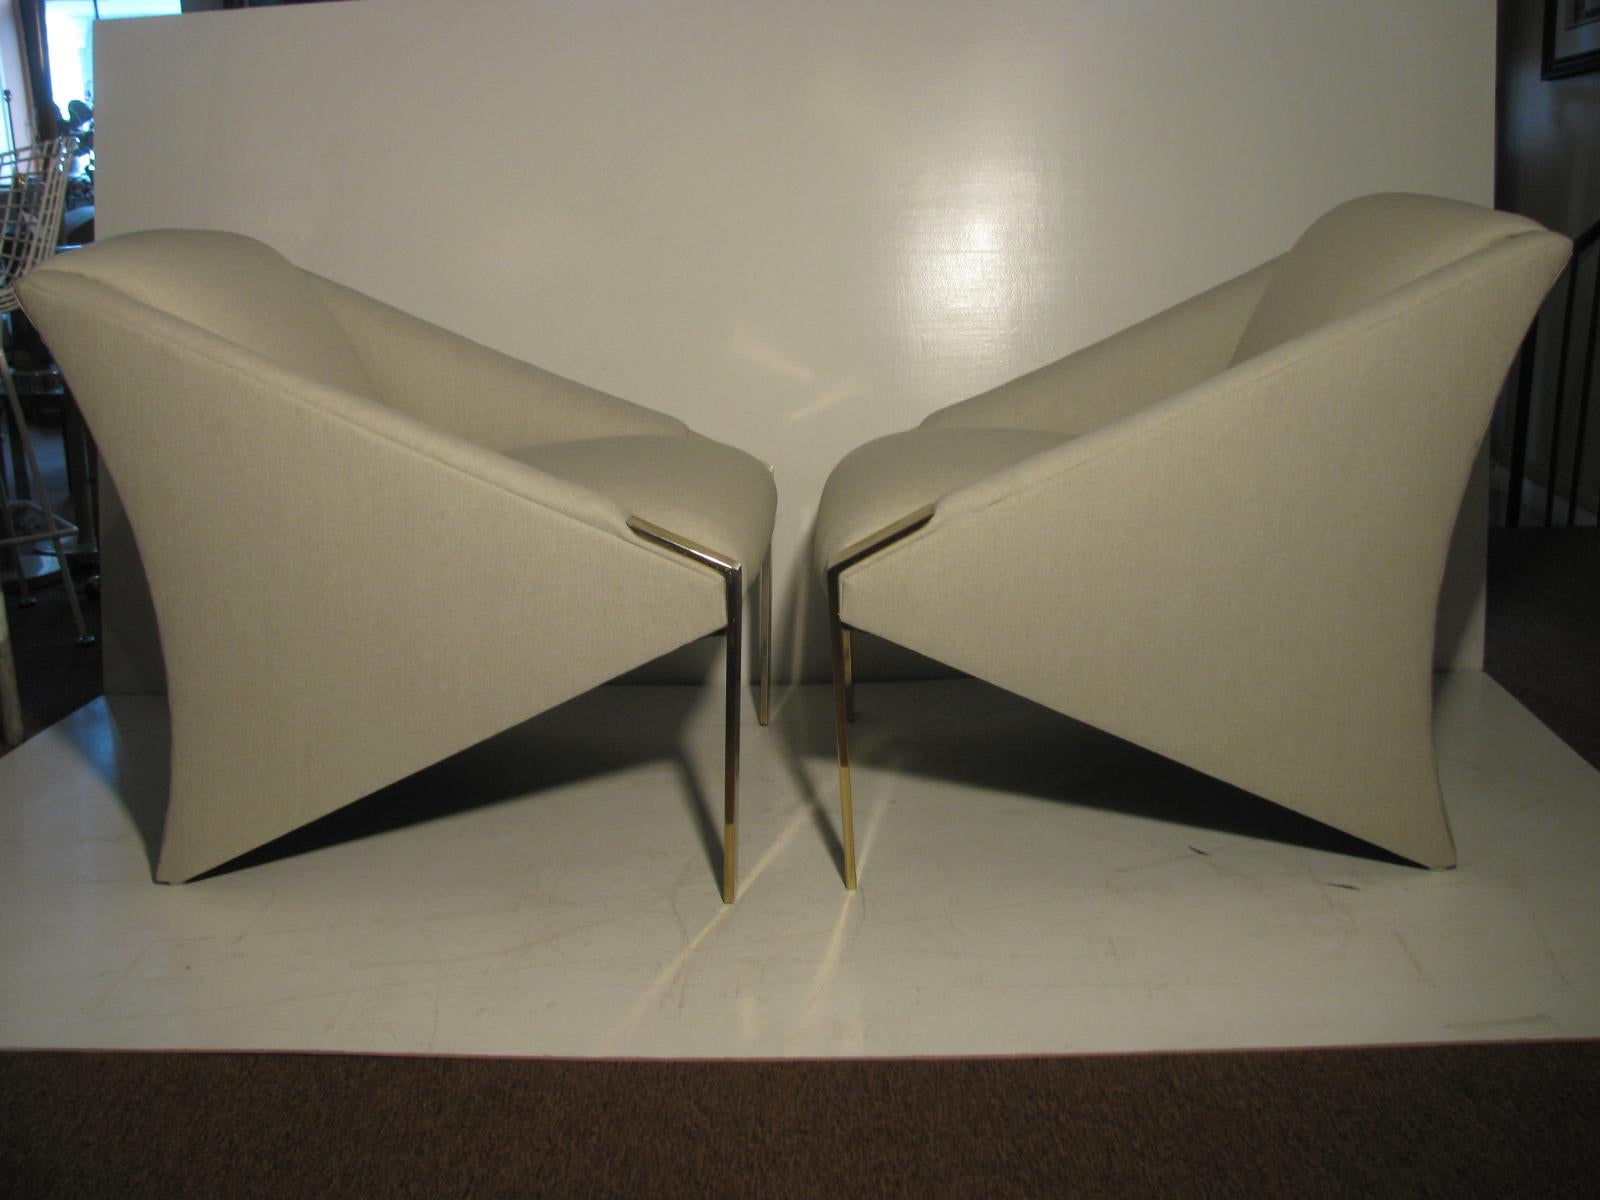 Pair of Mid-Century Modern Lounge Club Chairs (amerikanisch)